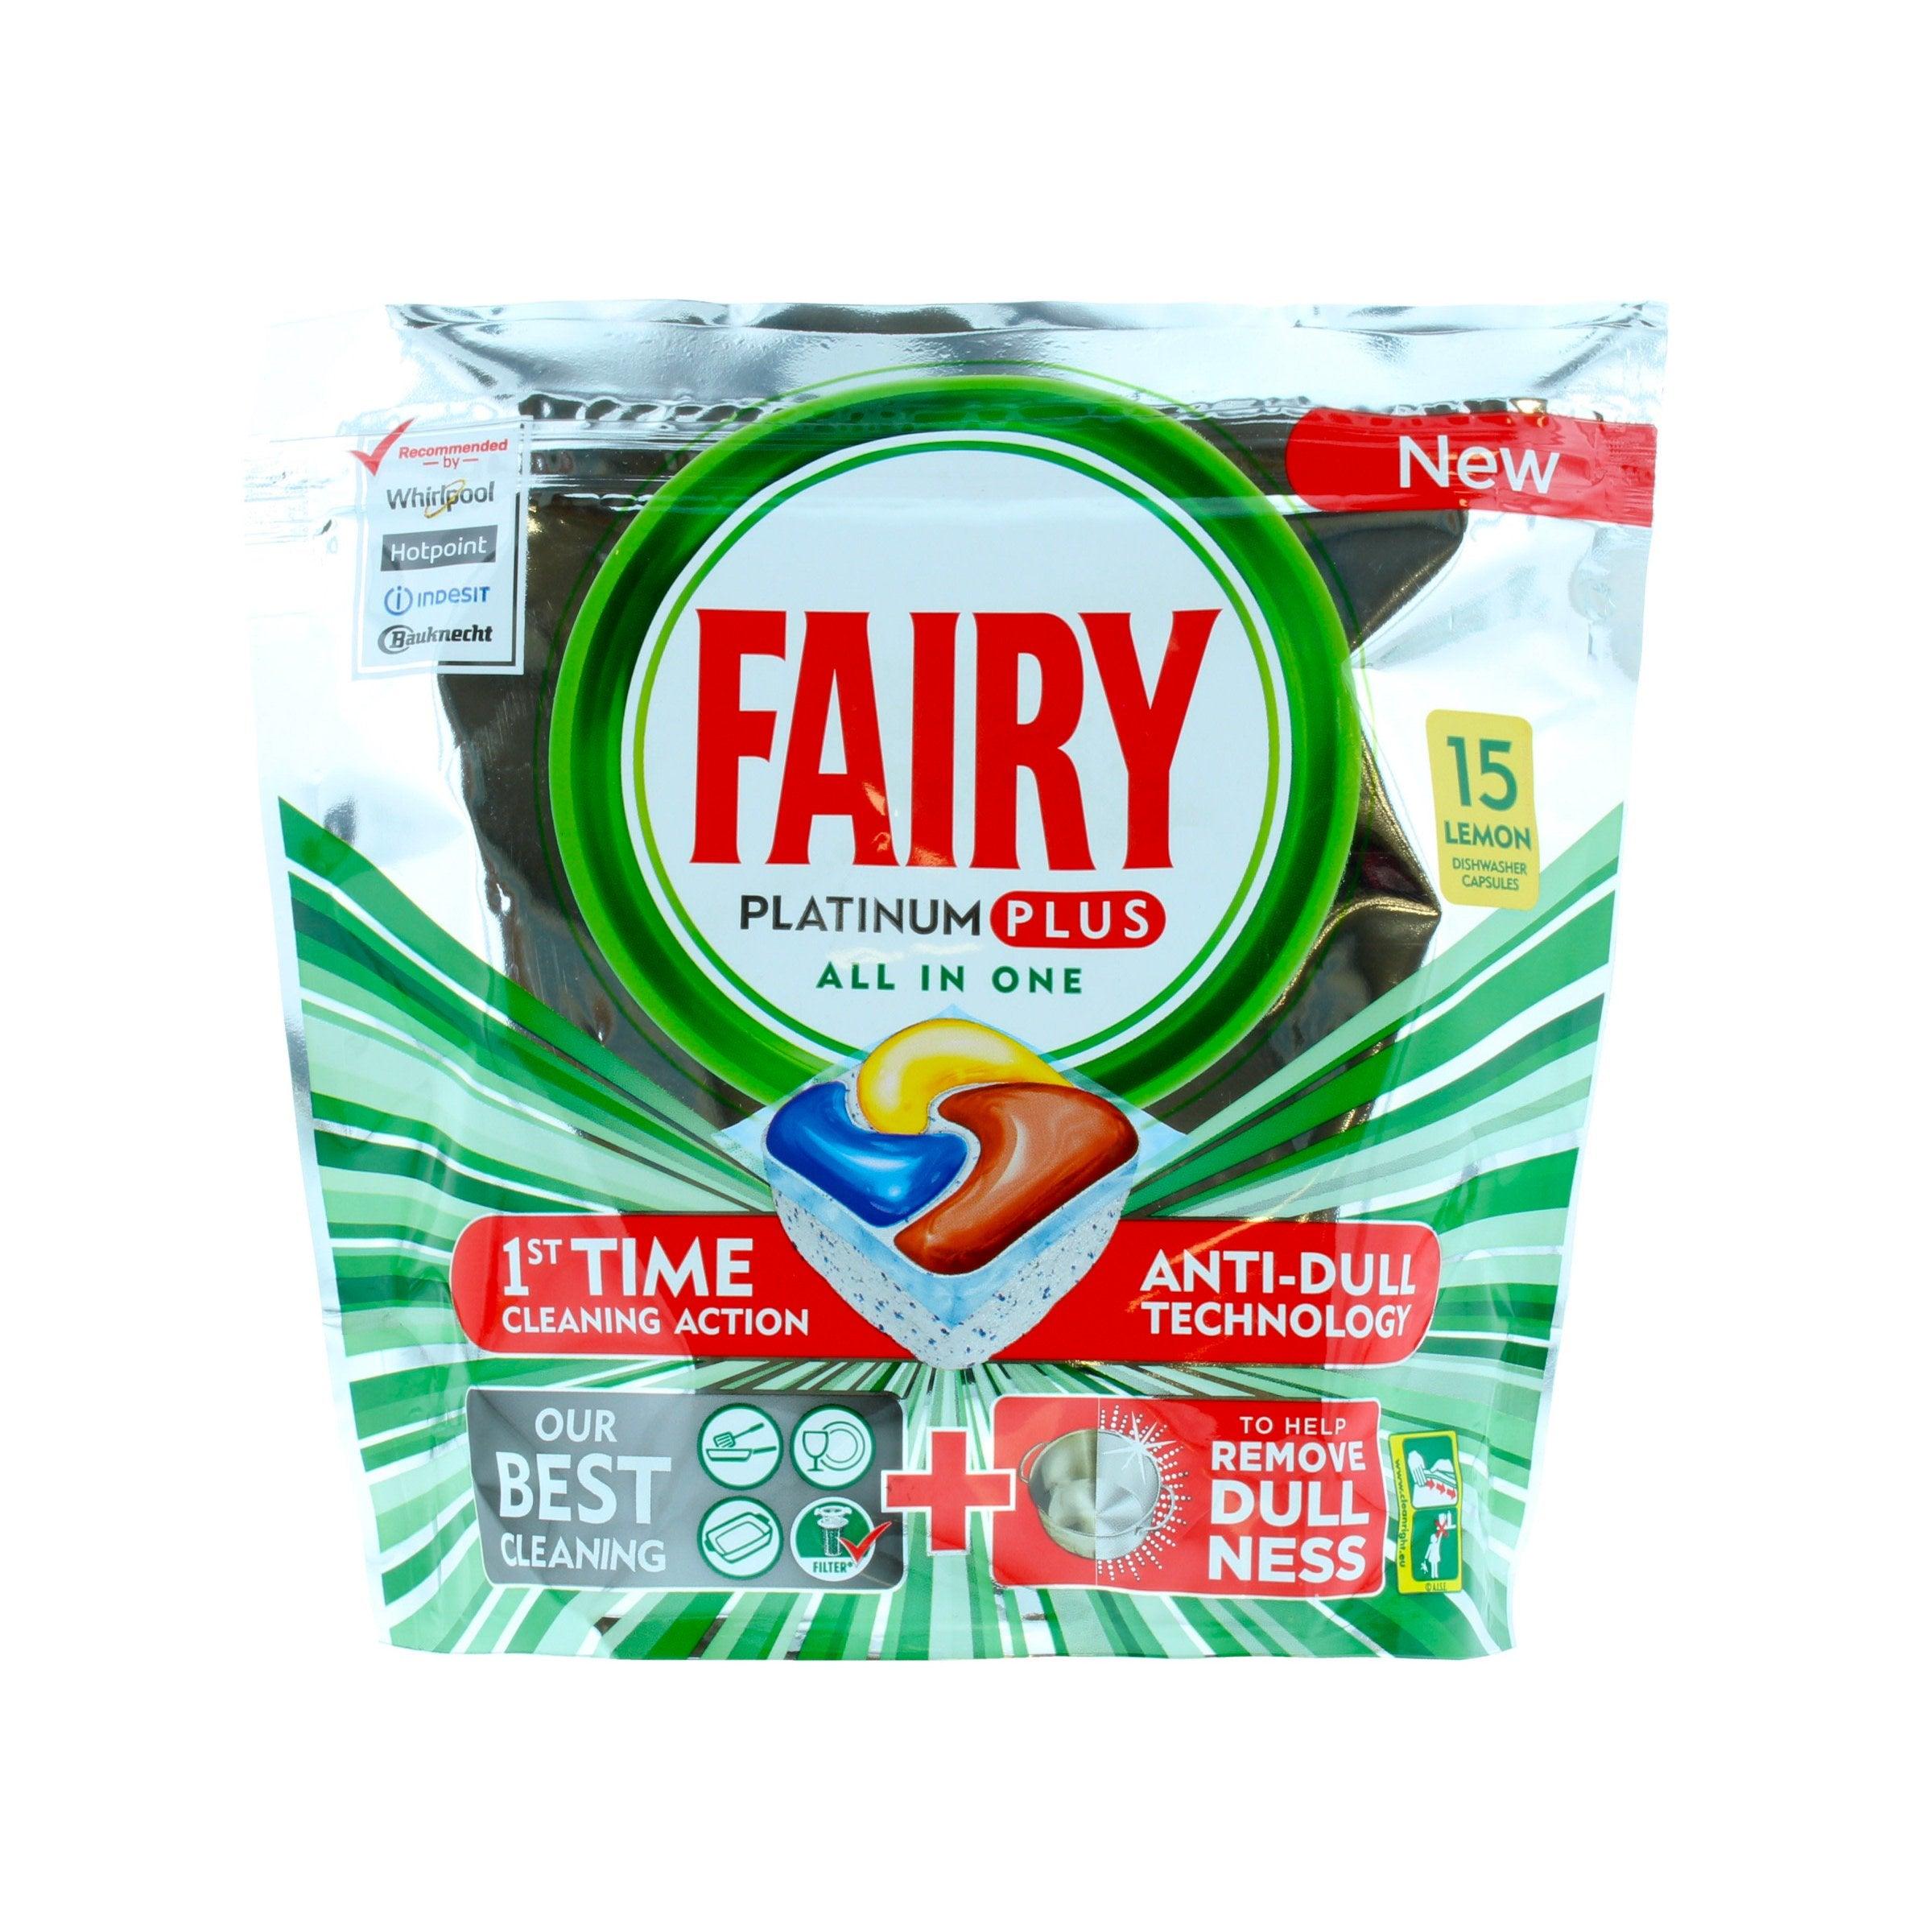 Fairy Platinum Plus DIshwasher Tablets Lemon - Pack of 15 - Vending Superstore